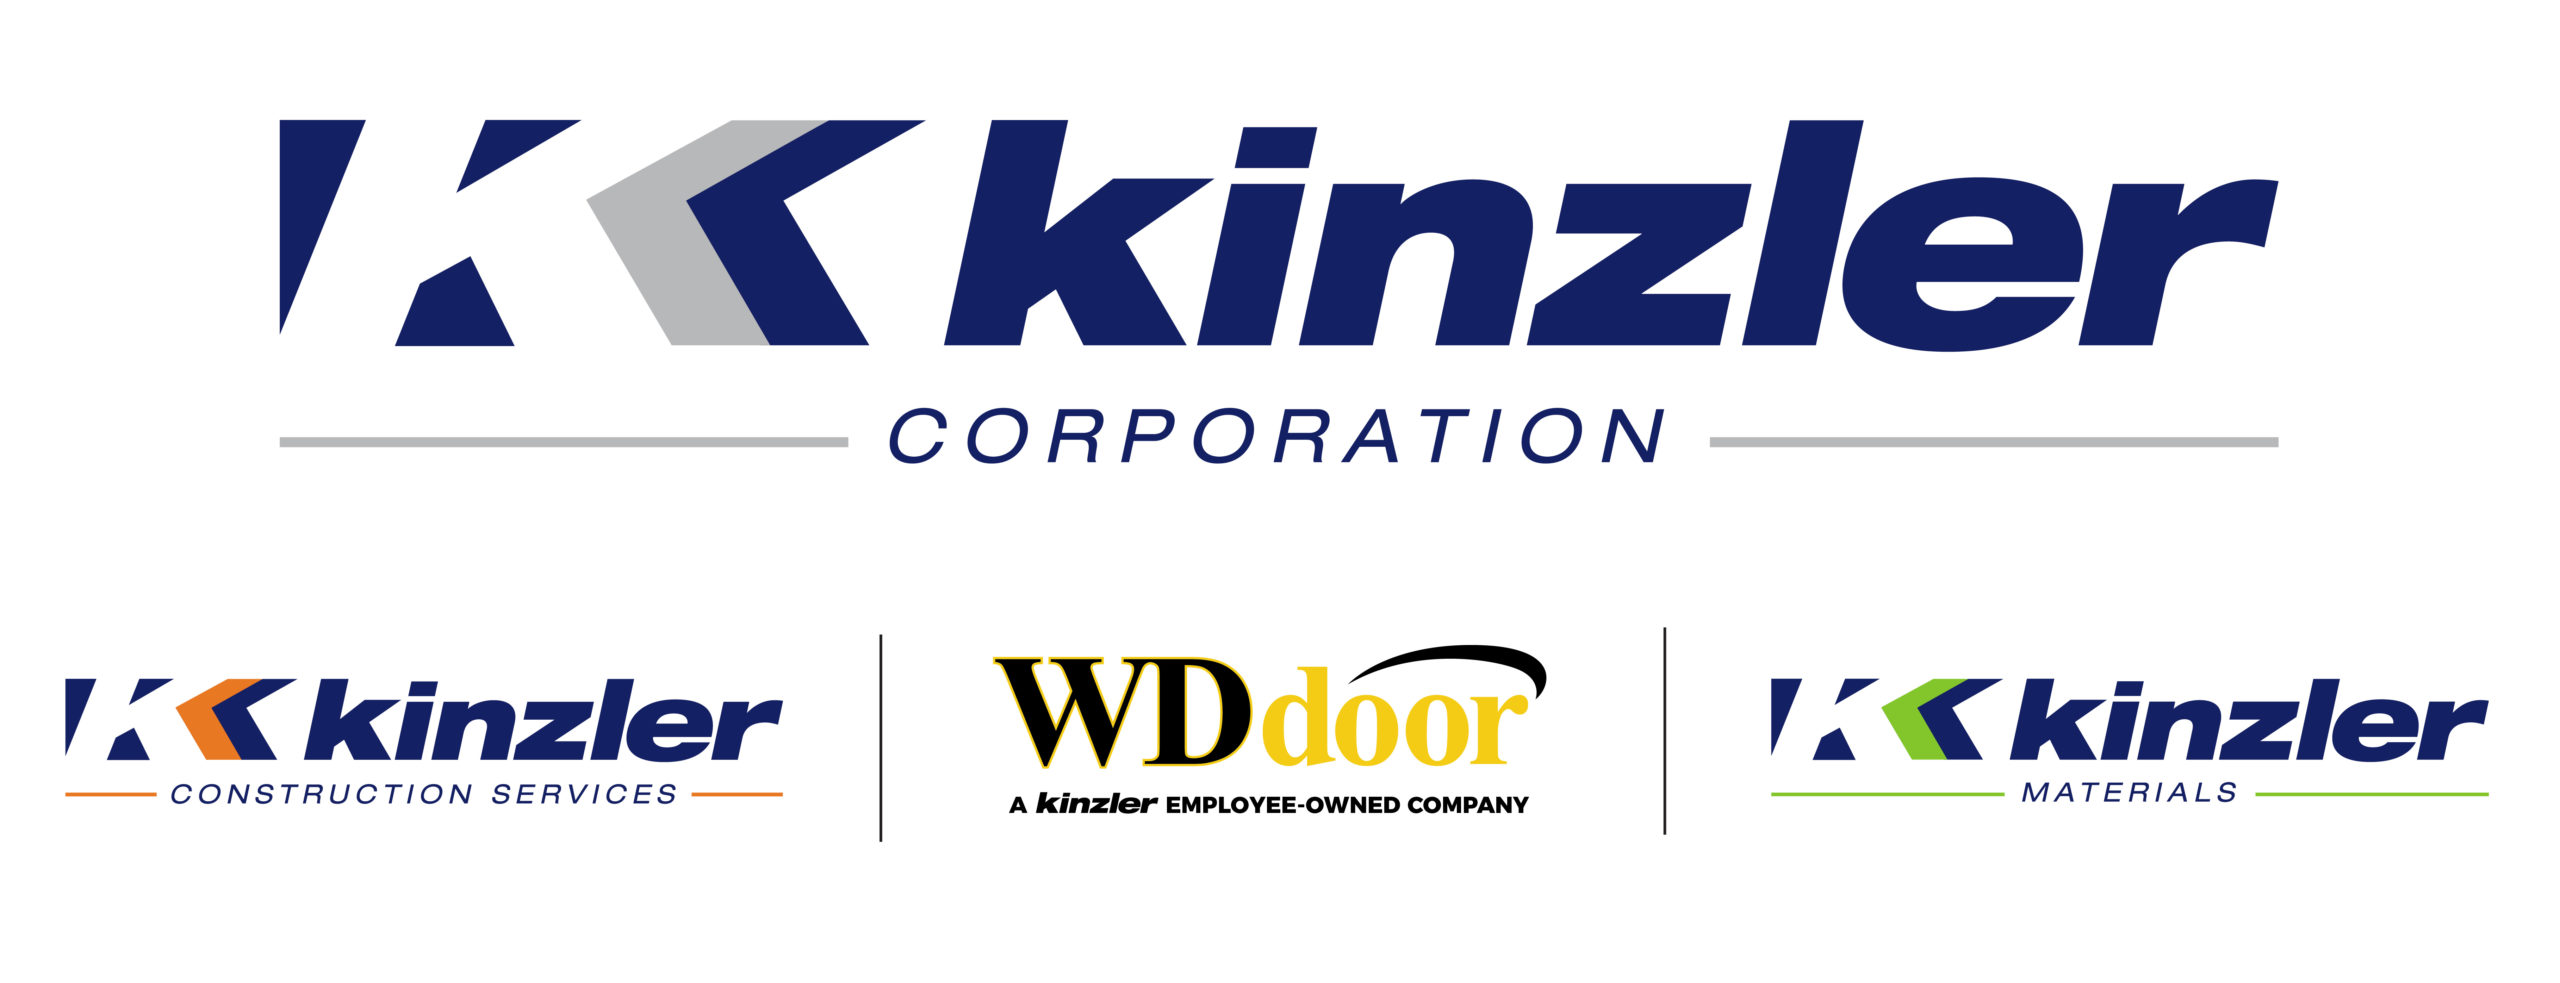 Kinzler-Corporation-Family-scaled